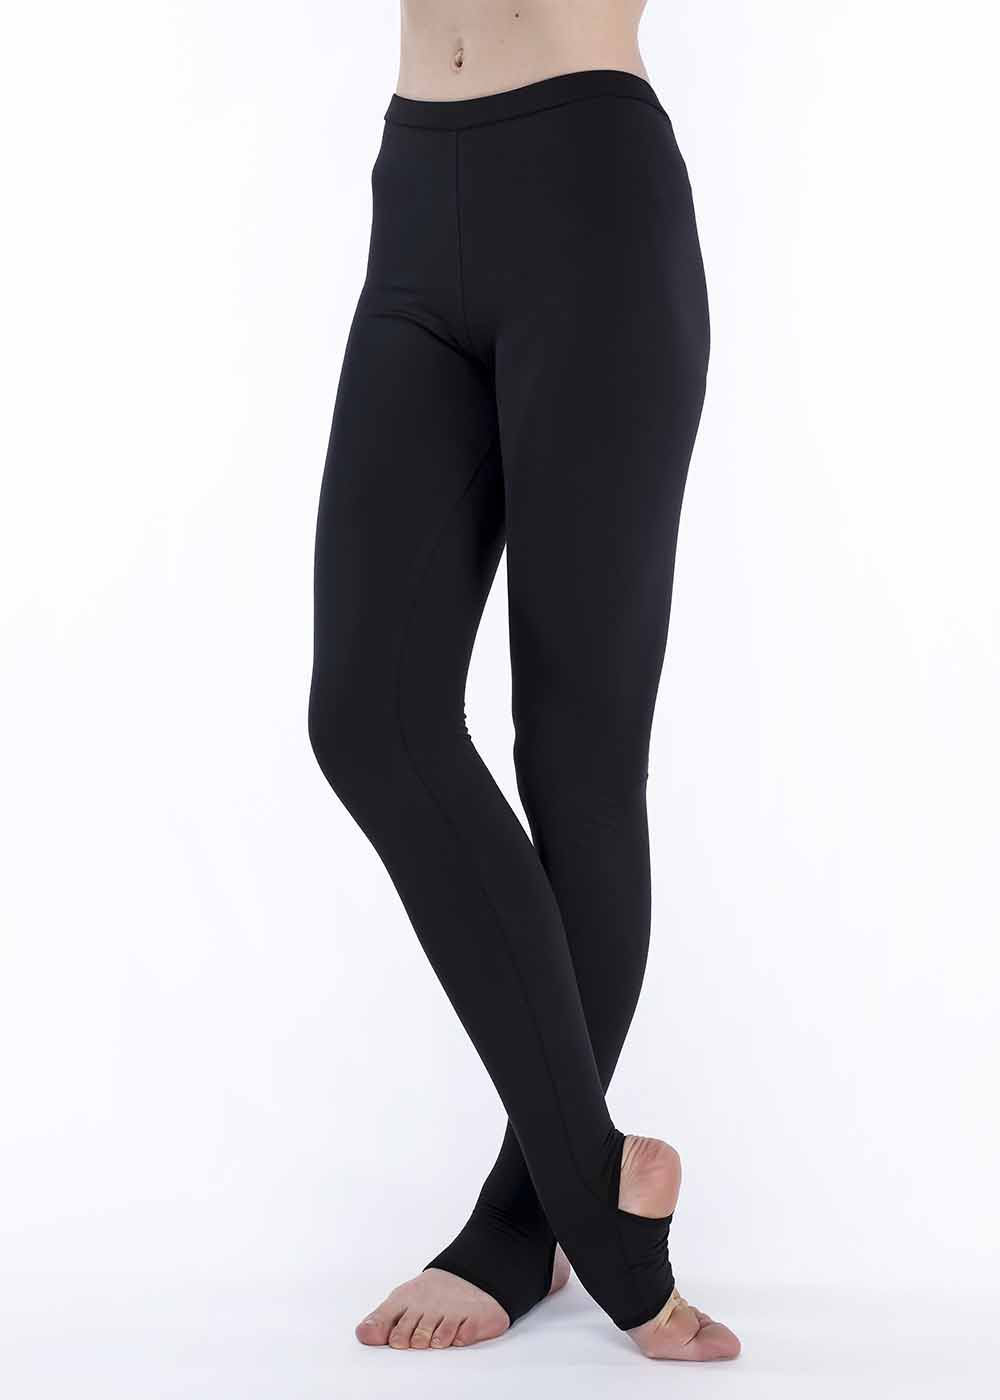 Stirrup leggings GRAND PRIX NELLY (polyamide) black size 128